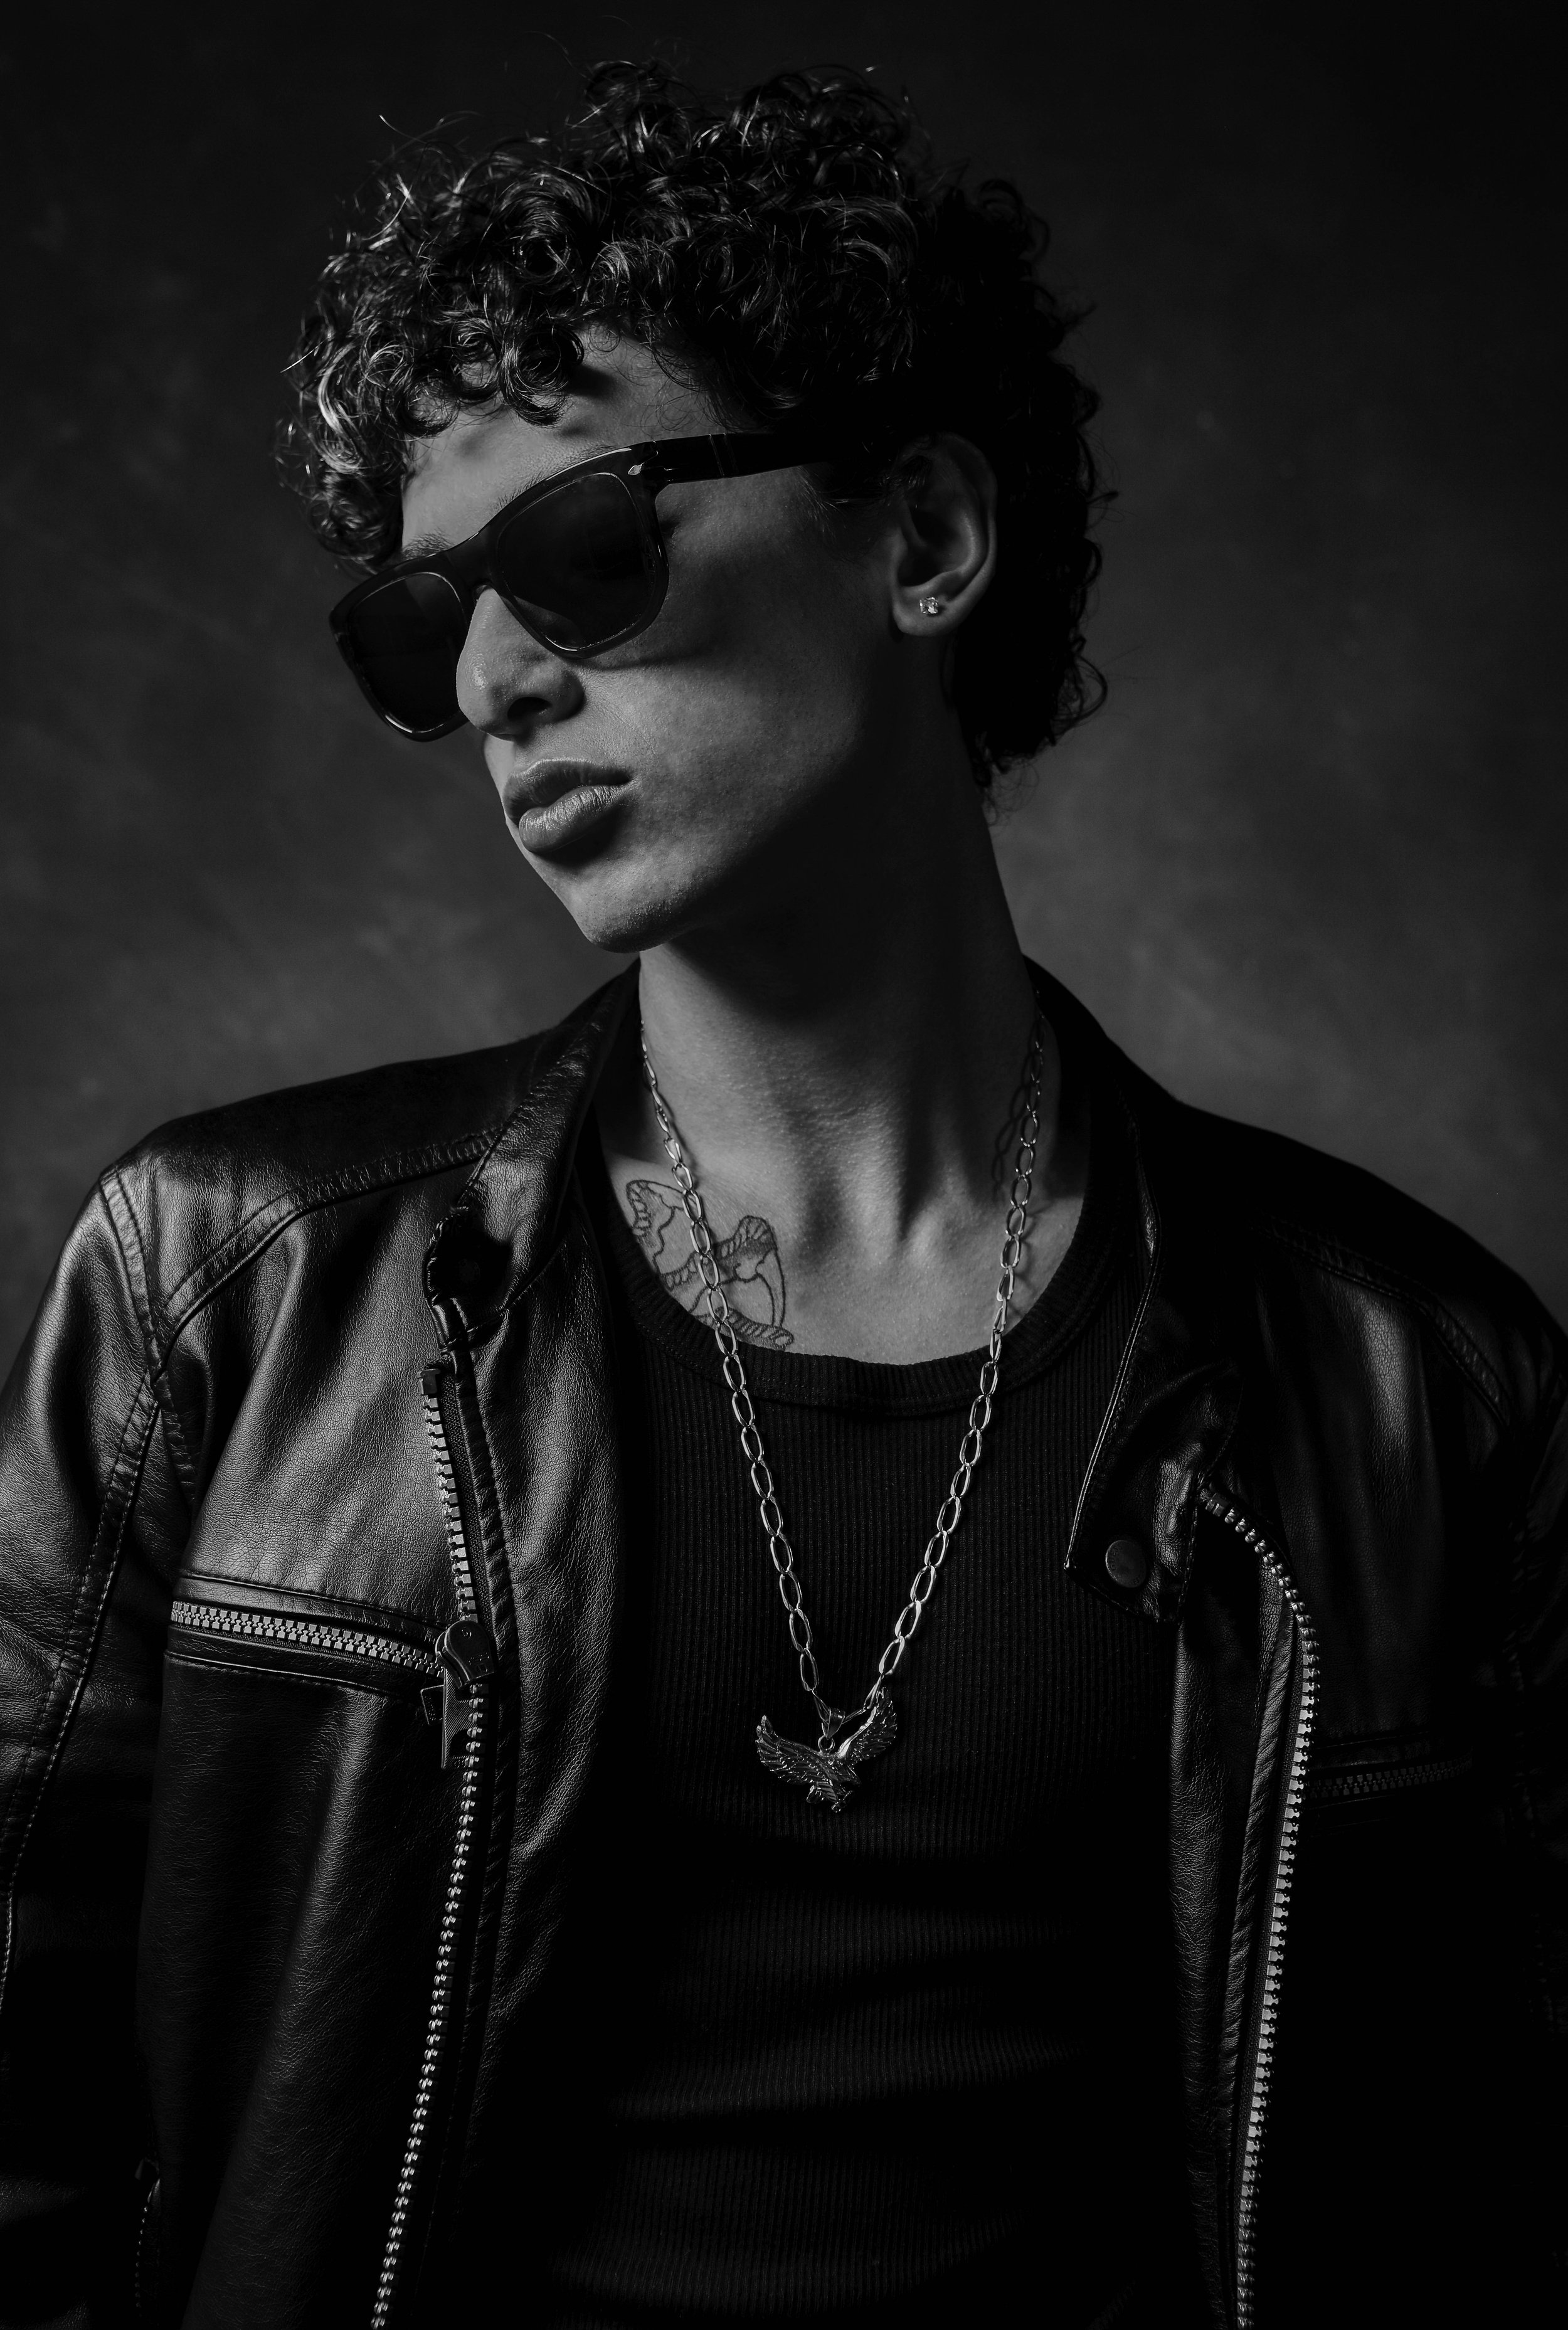 Male Model_BLK Leather Jacket_Sunglasses_B:W_47A3790 copy.jpg